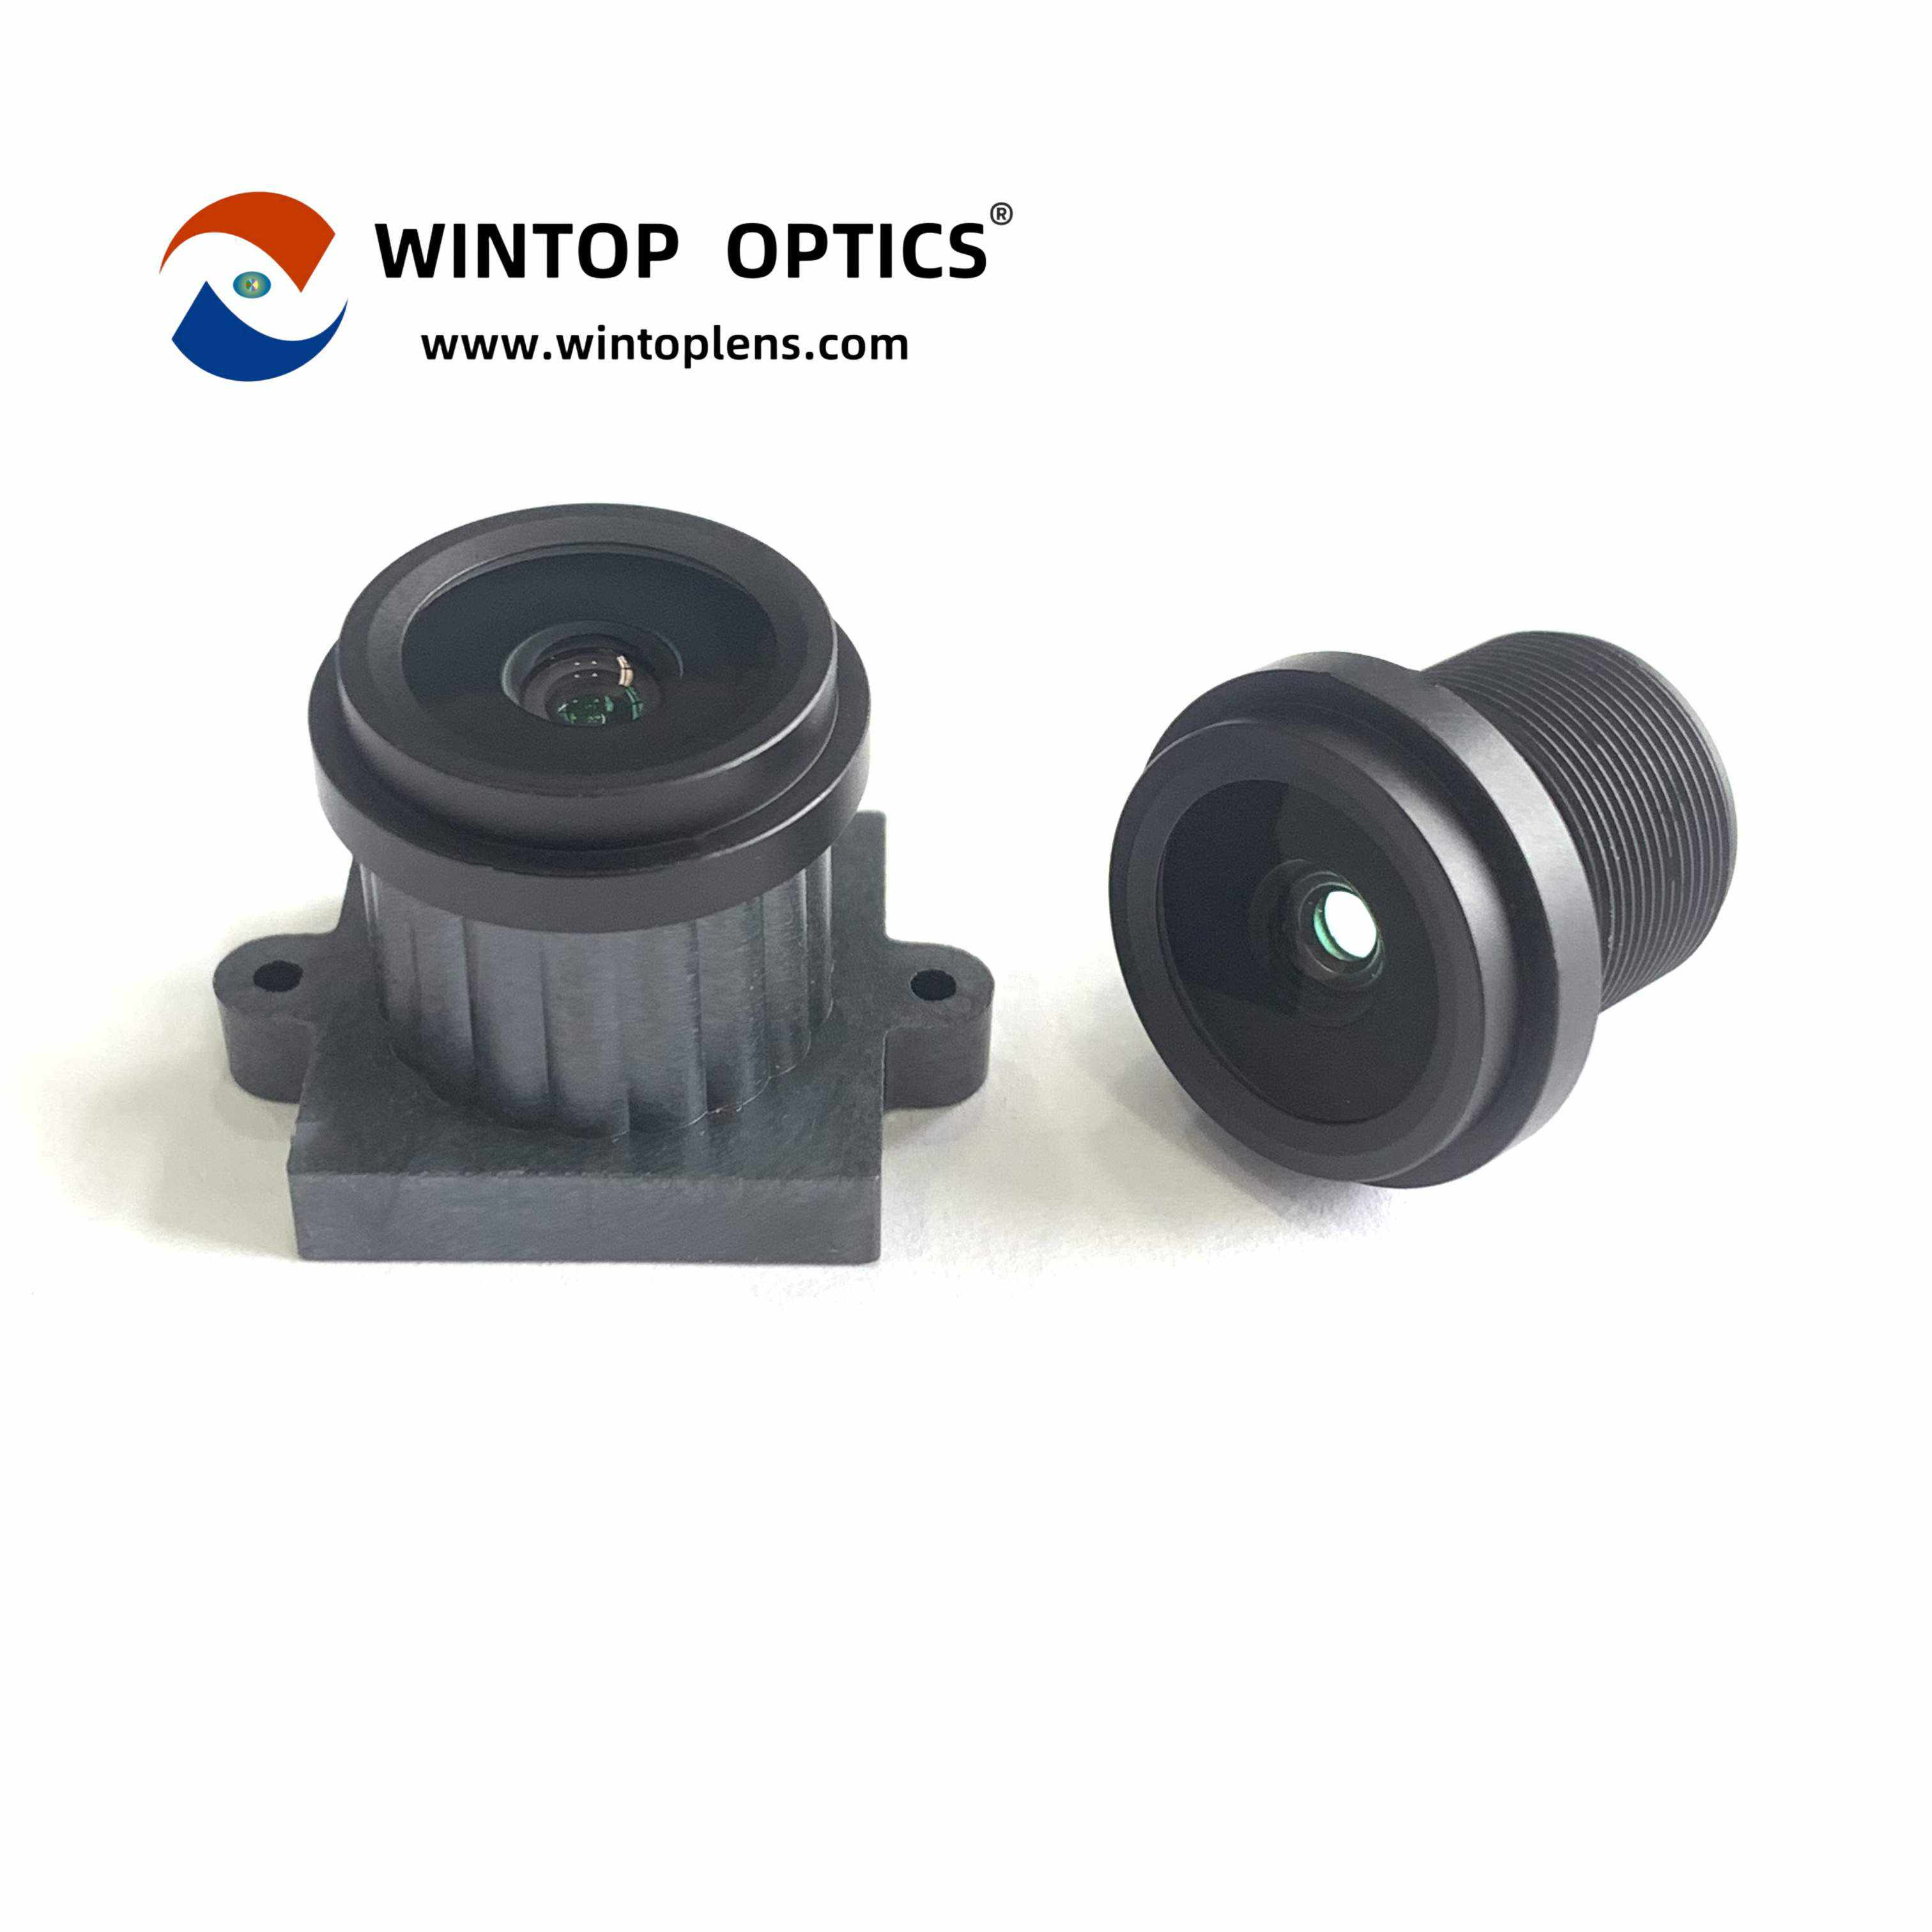 ADAS Lens-Wintop